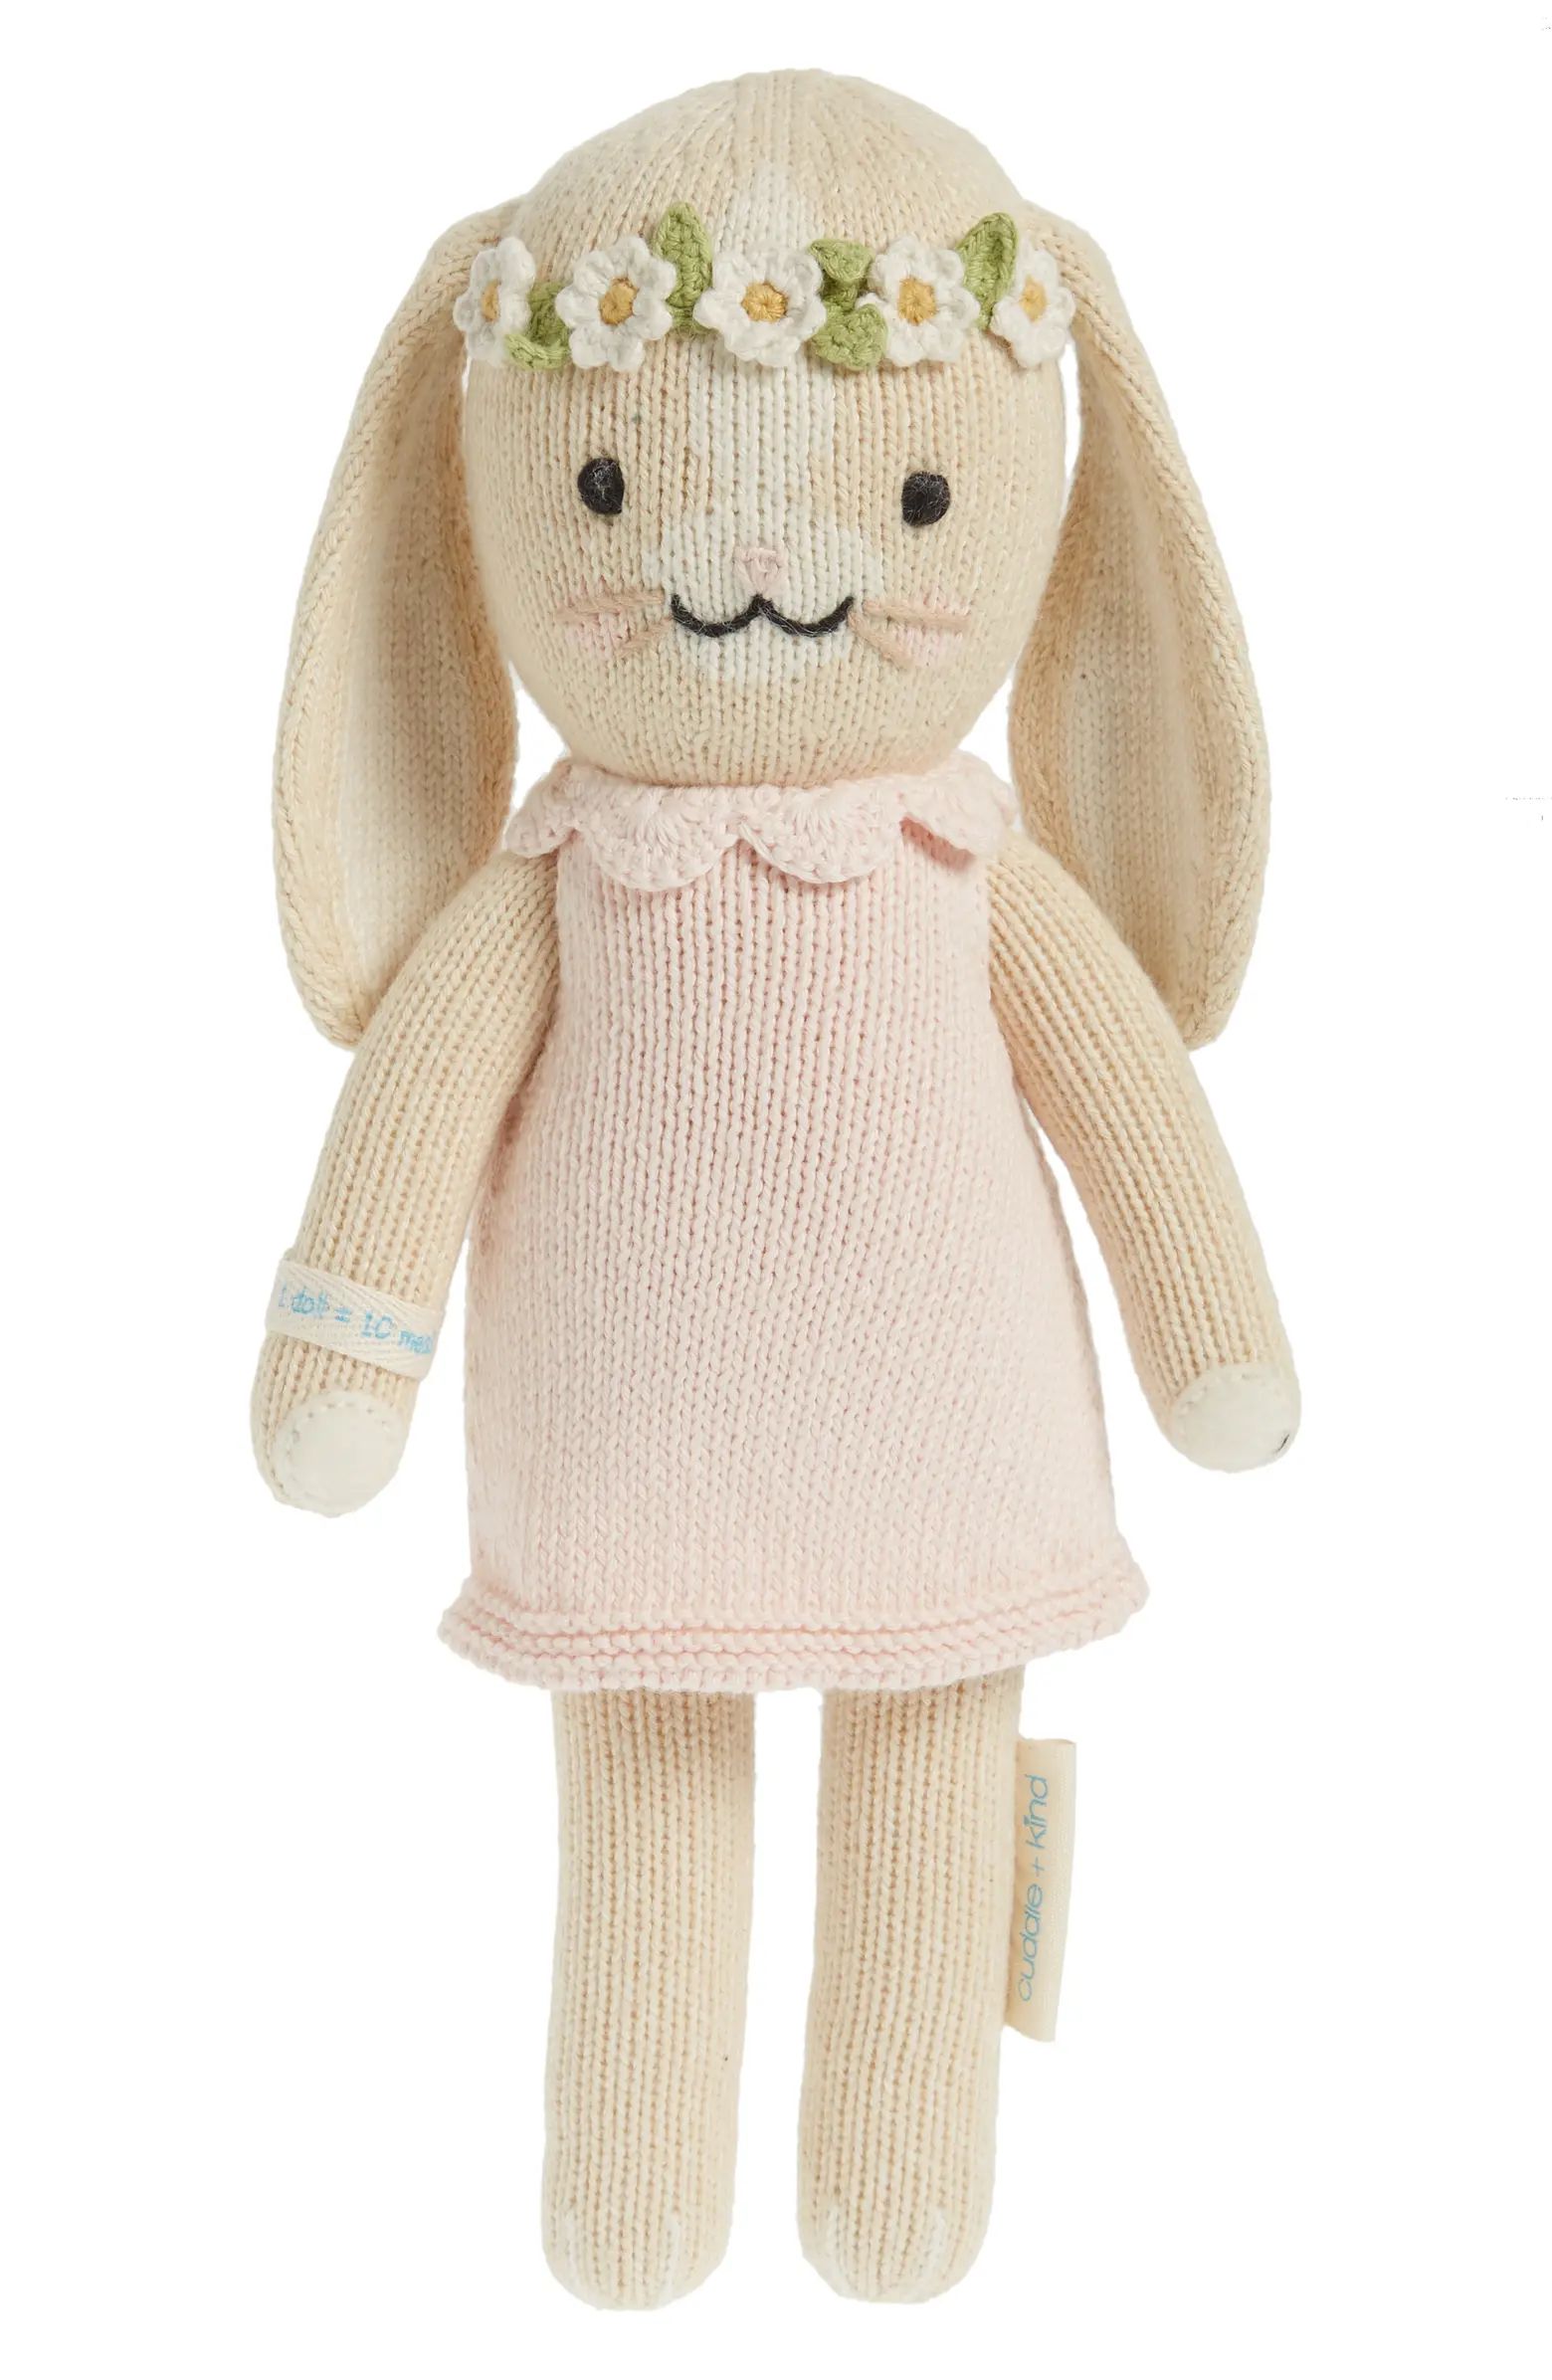 cuddle + kind Mini Blush Hannah the Bunny Stuffed Animal | Nordstrom